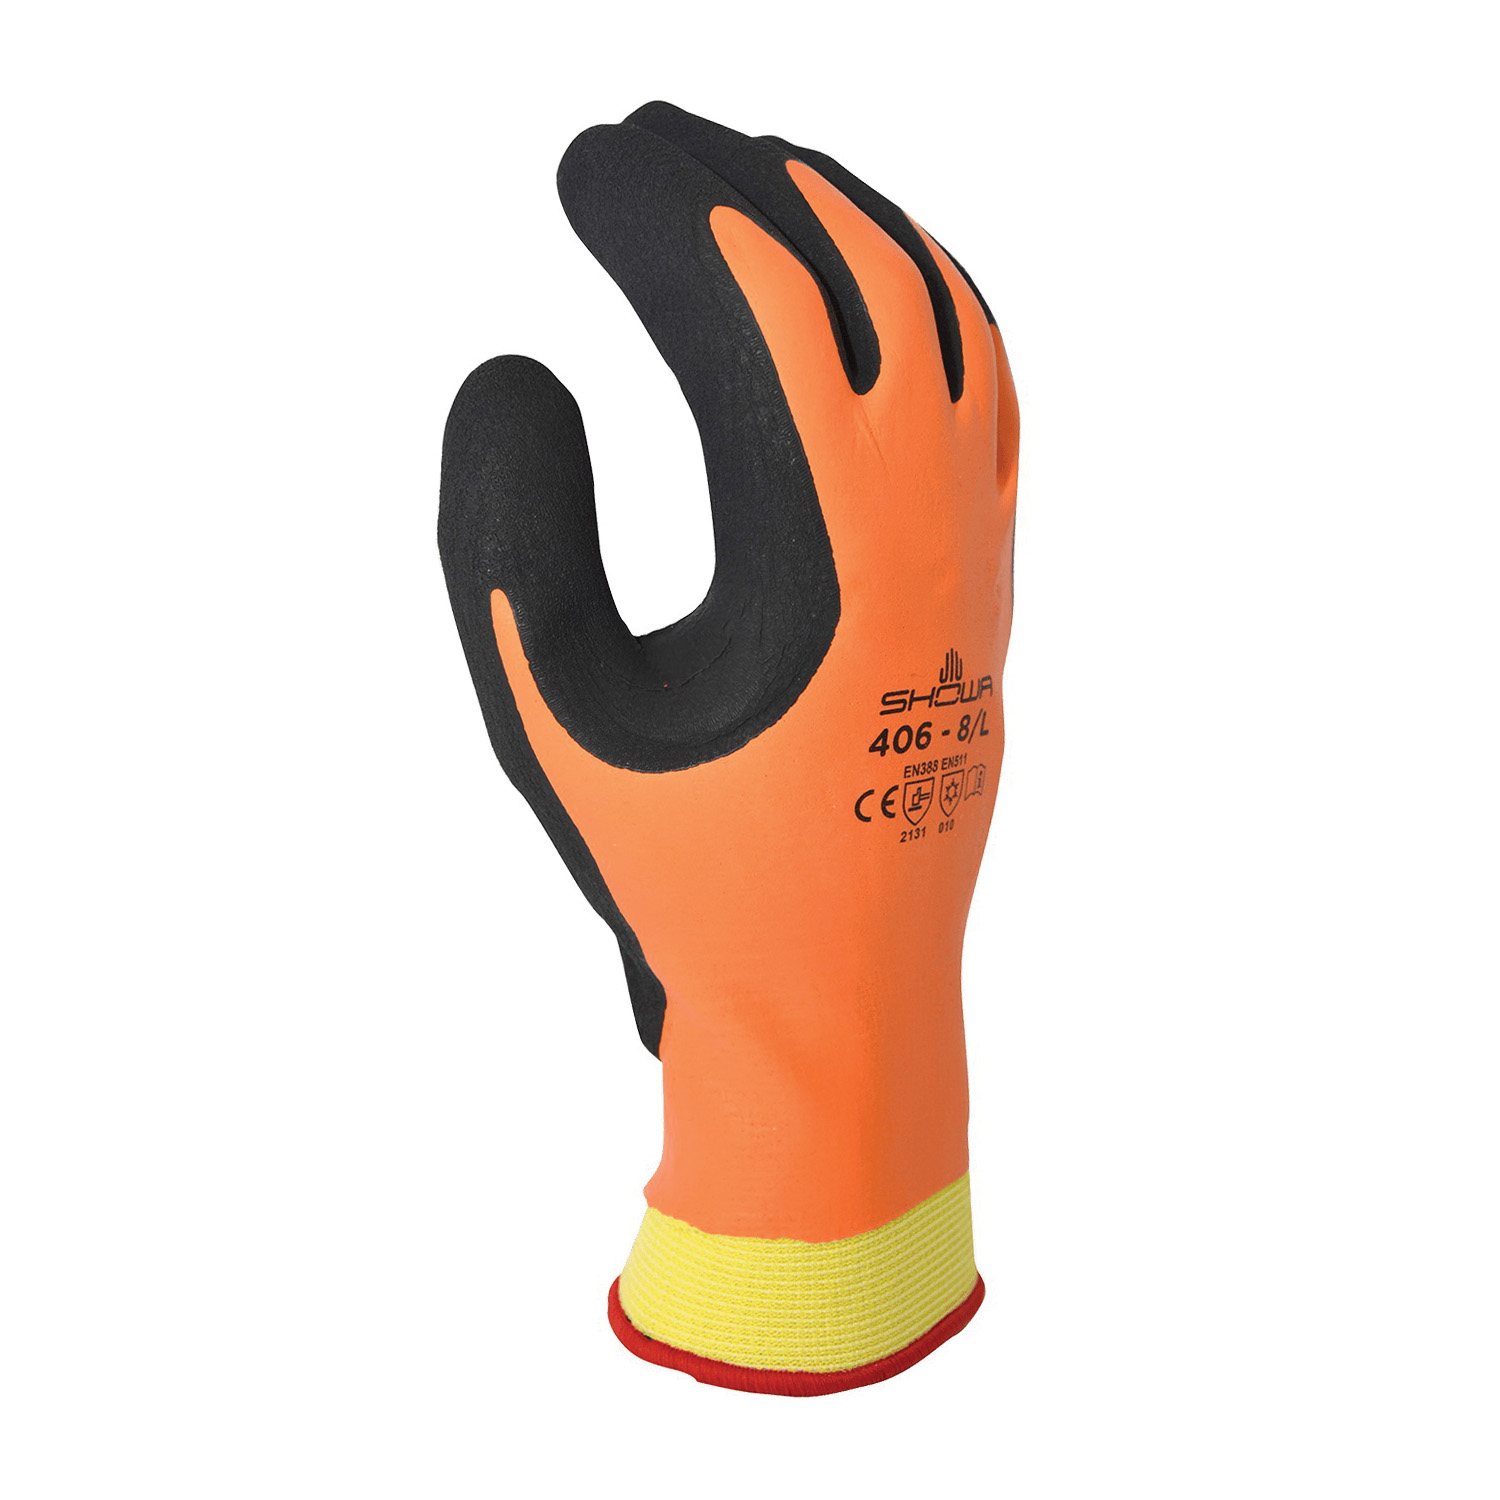 406L-08.RT Insulated Gloves, L, Orange